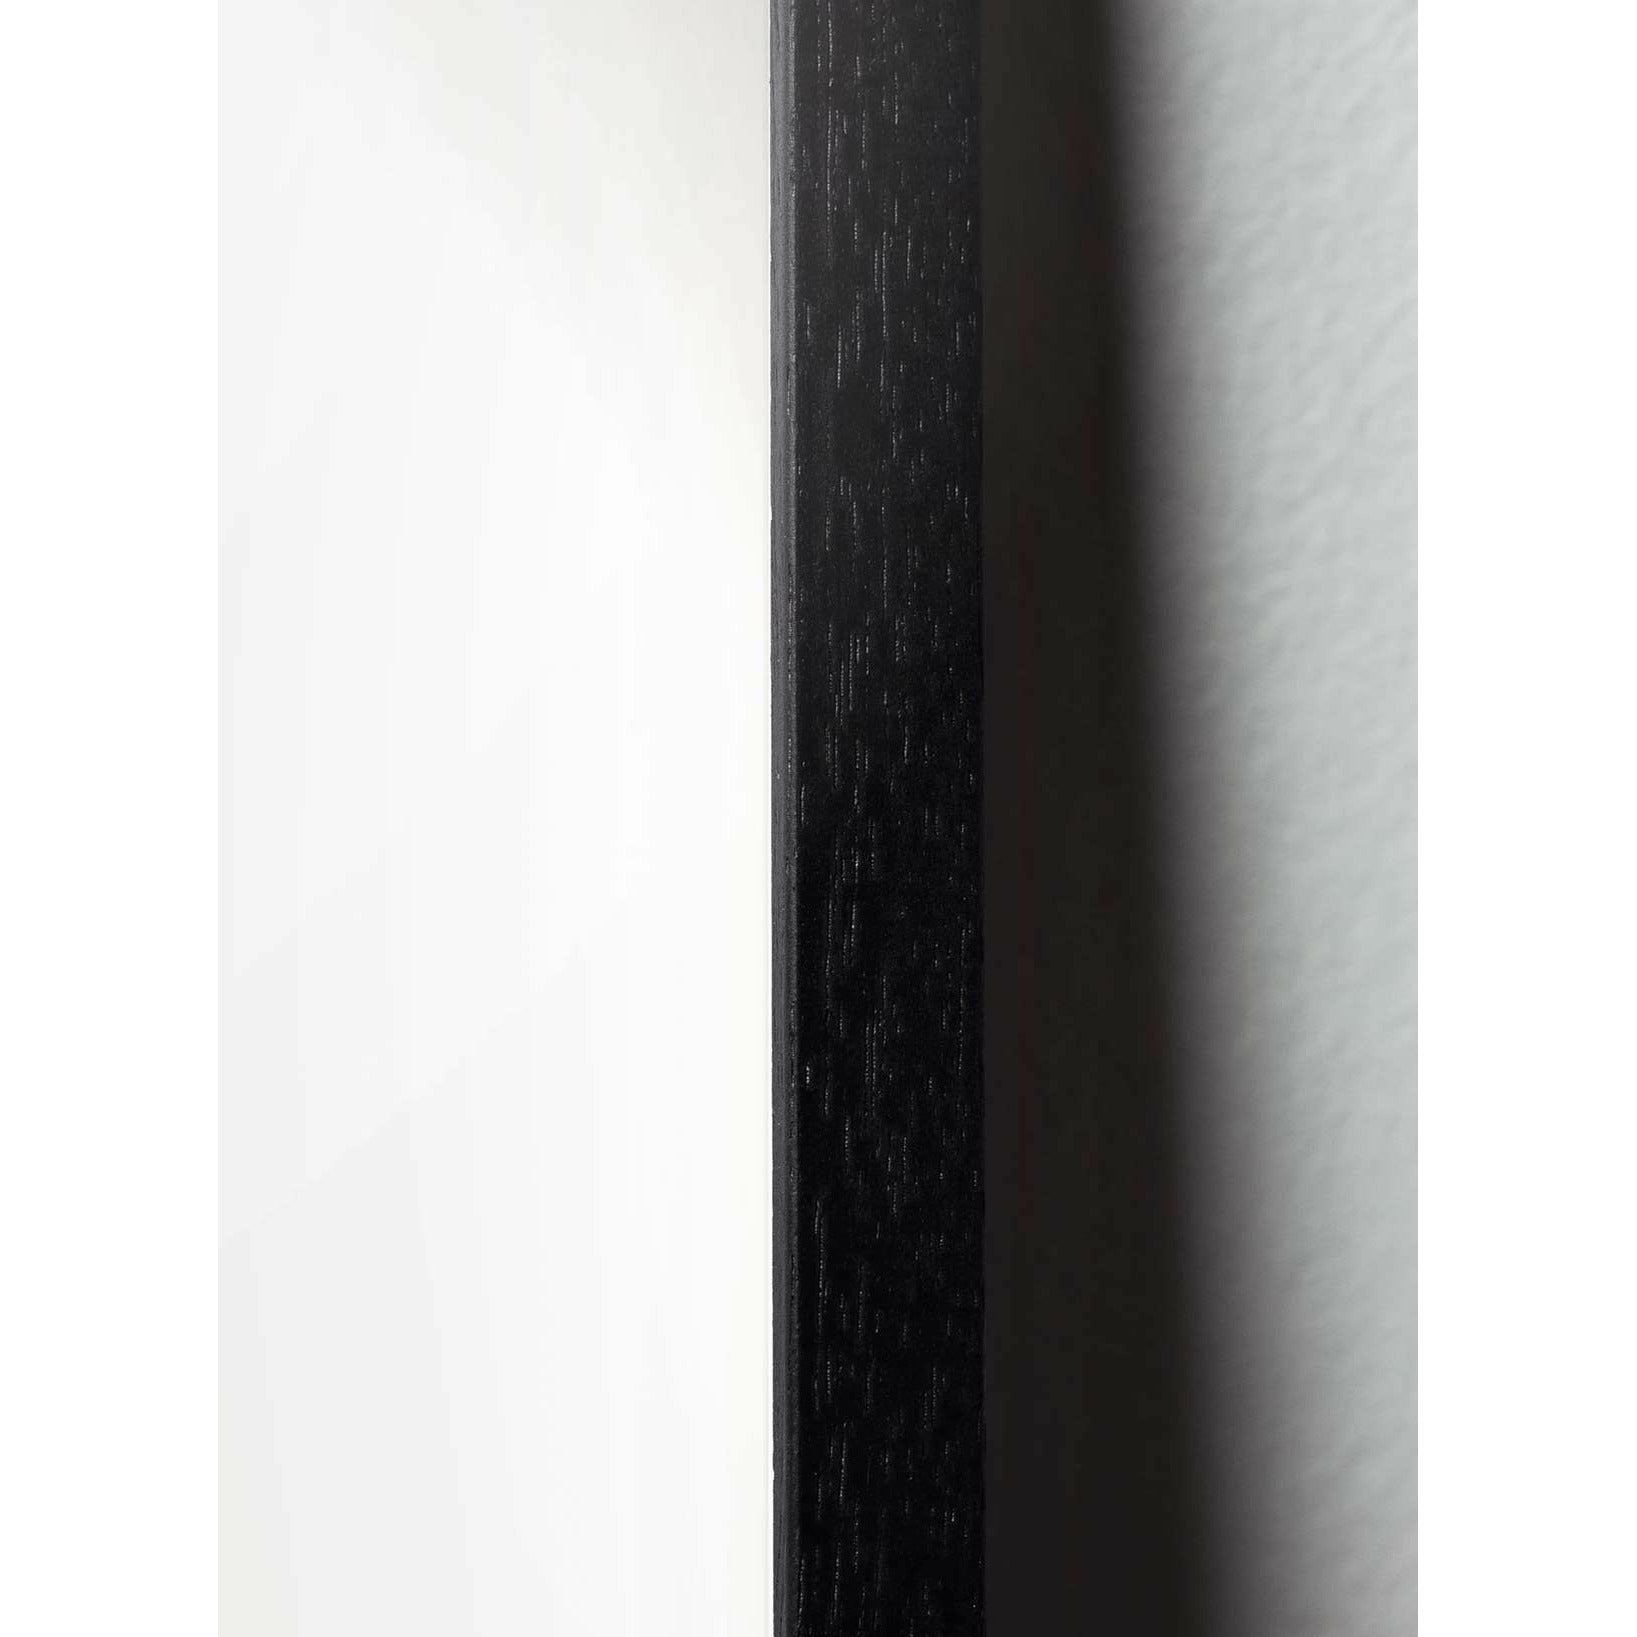 Brainchild Ant klassisk affisch, ram i svart -målat trä 50x70 cm, sandfärgad bakgrund